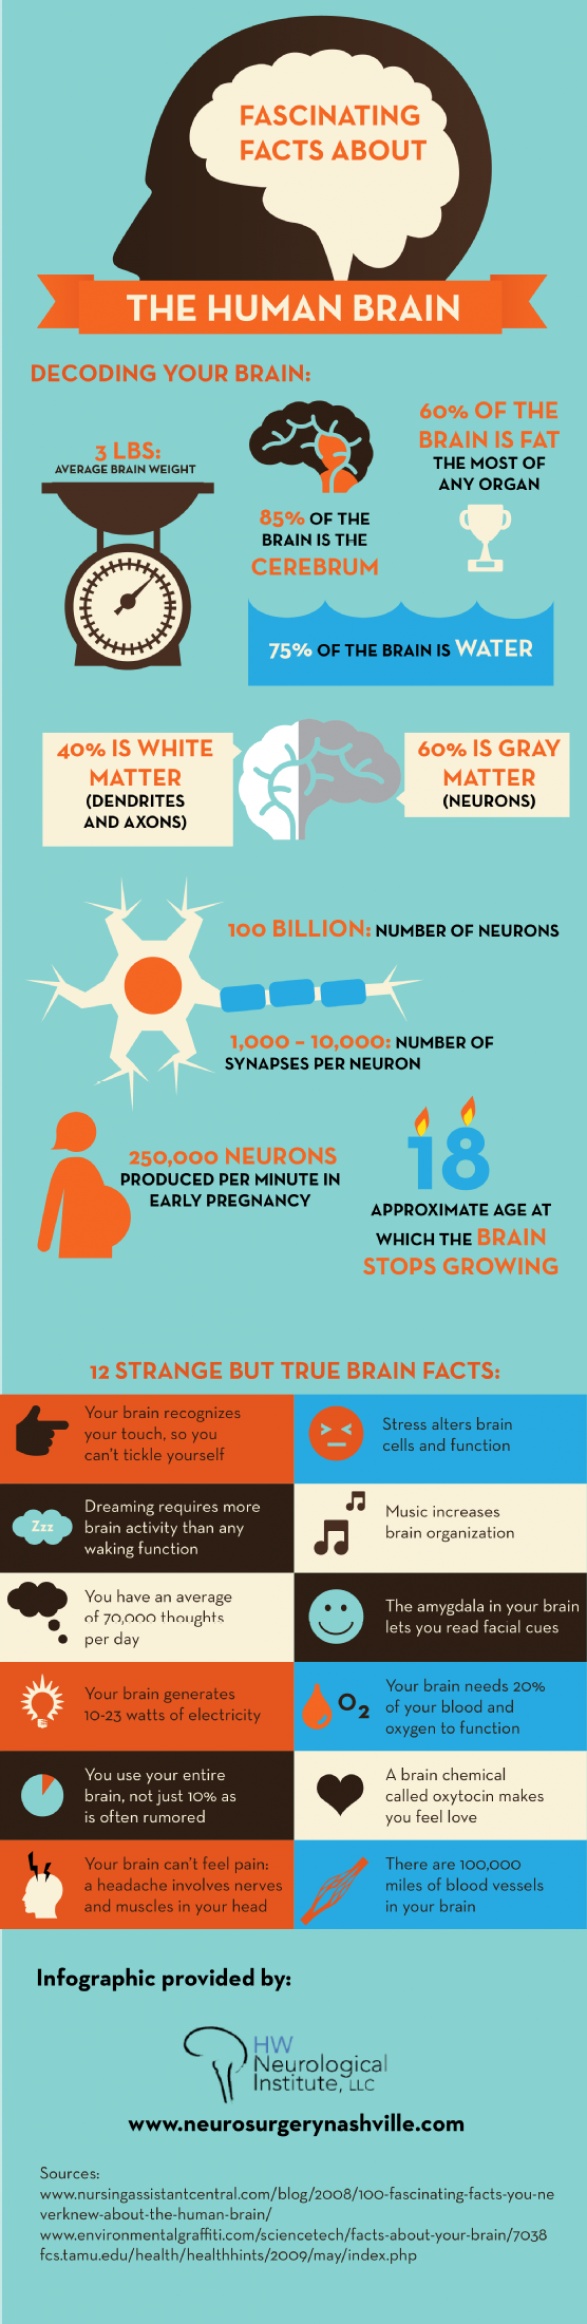 The human brain infographic